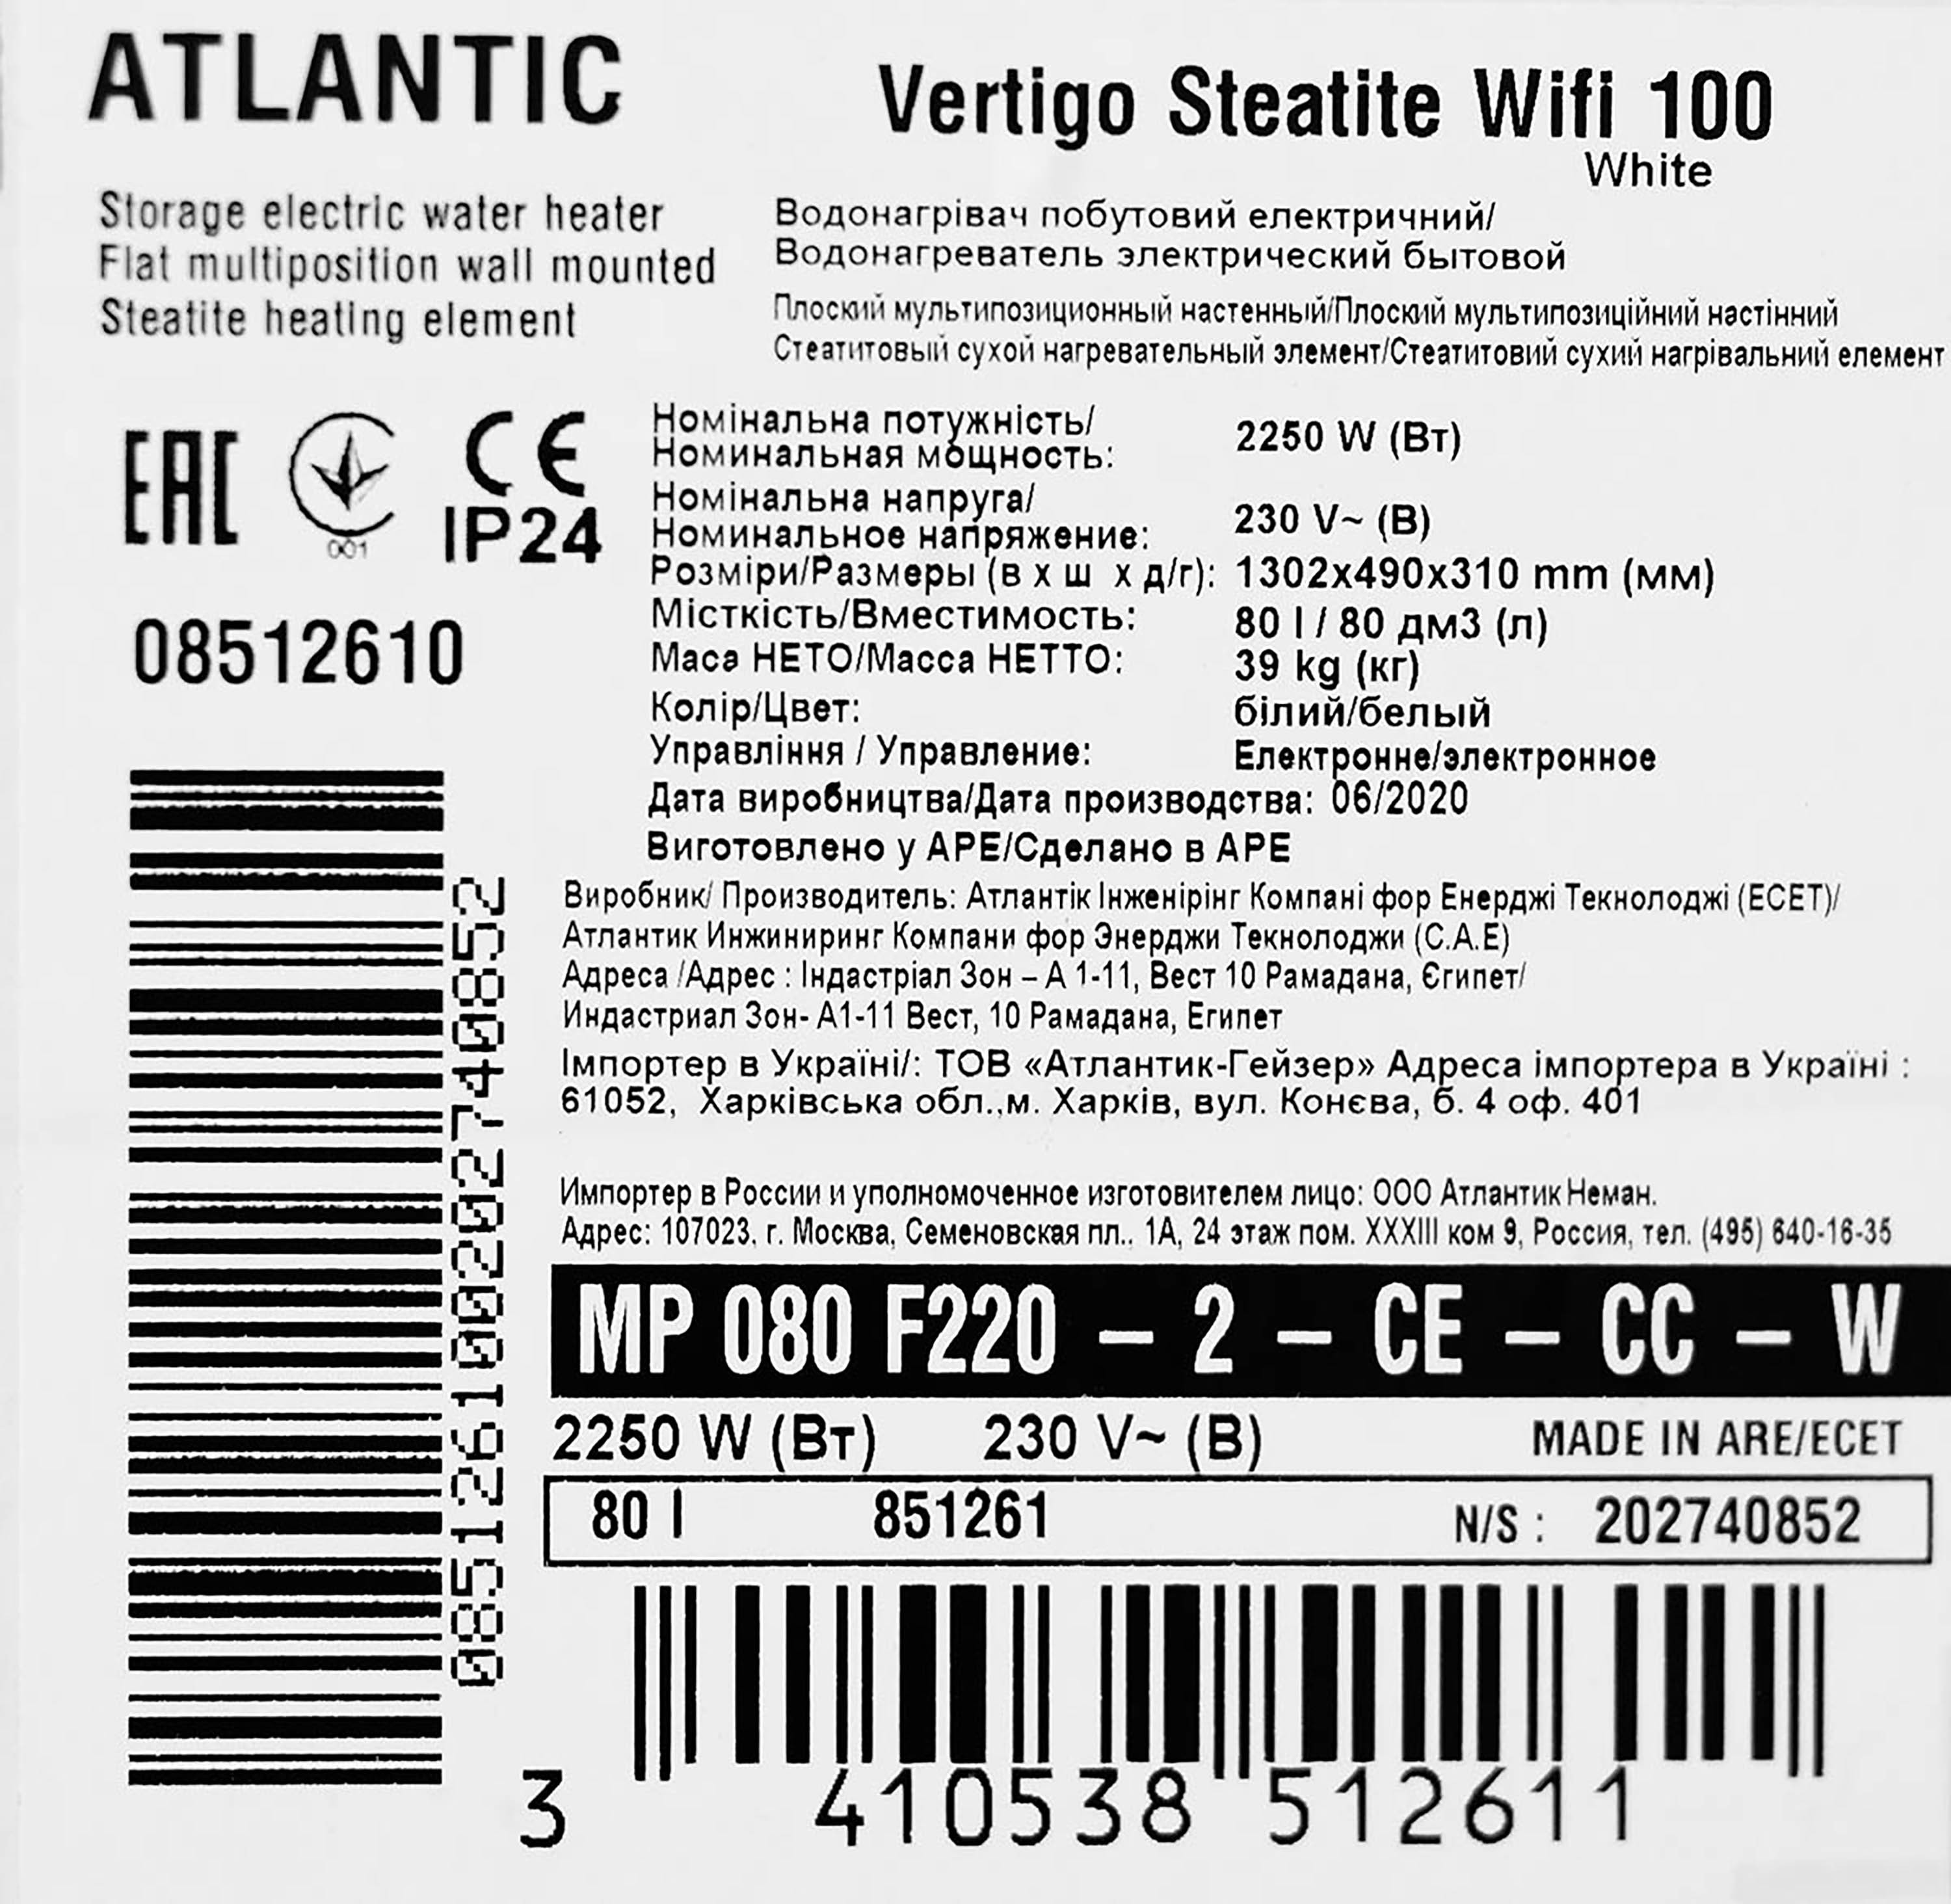 продаём Atlantic Vertigo Steatite WI-FI 100 MP 080 F220-2-CE-CC-W в Украине - фото 4